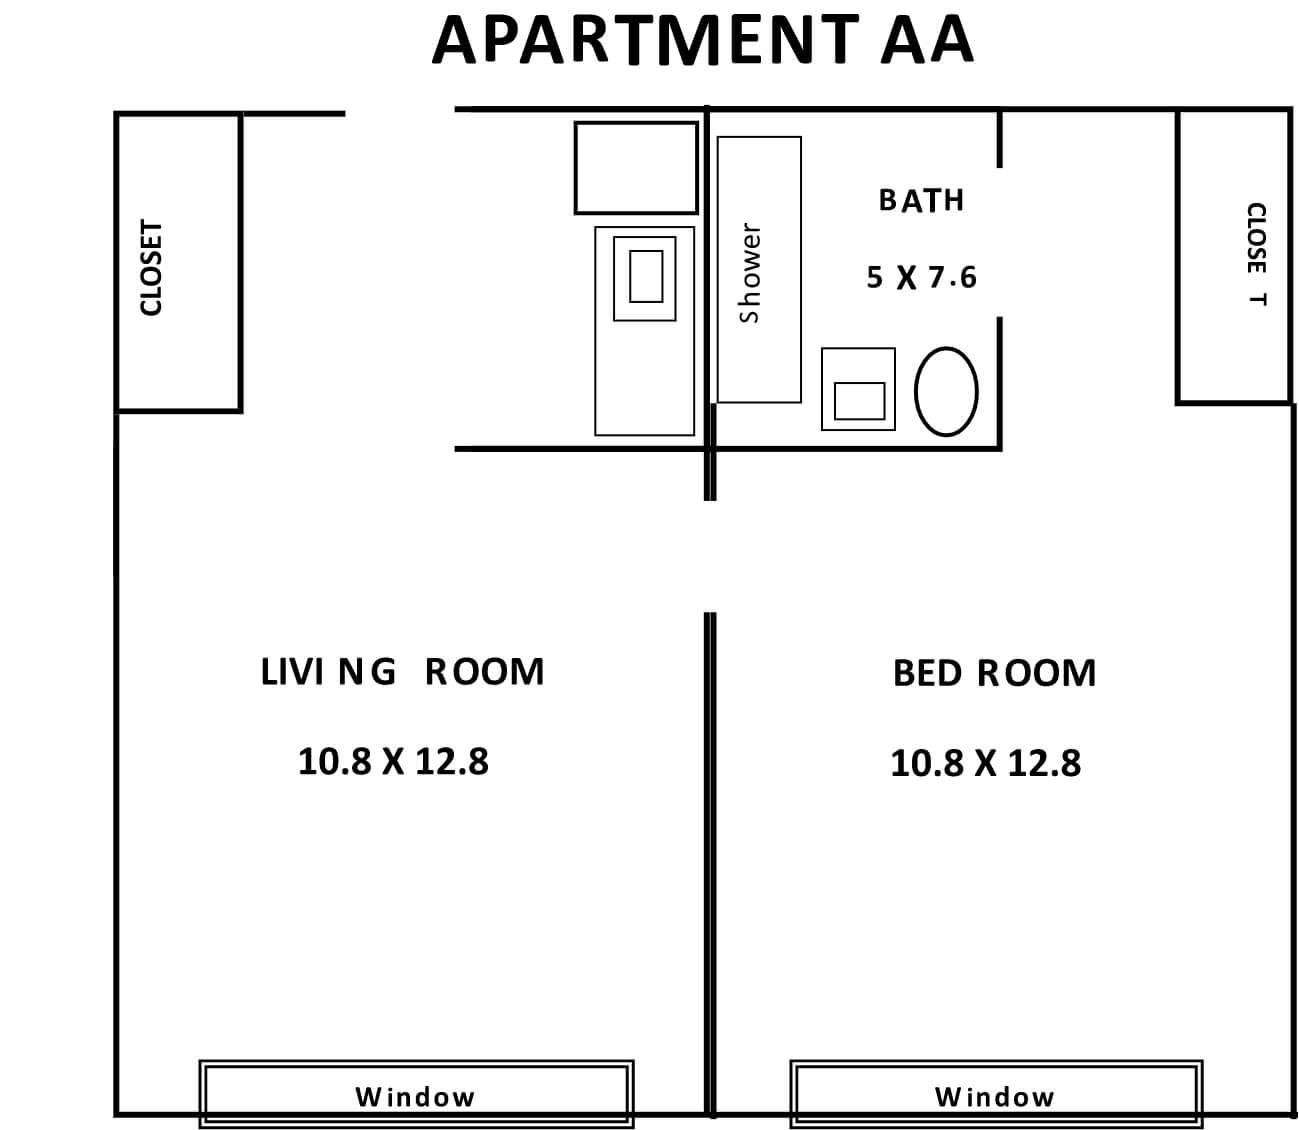 Apartment AA